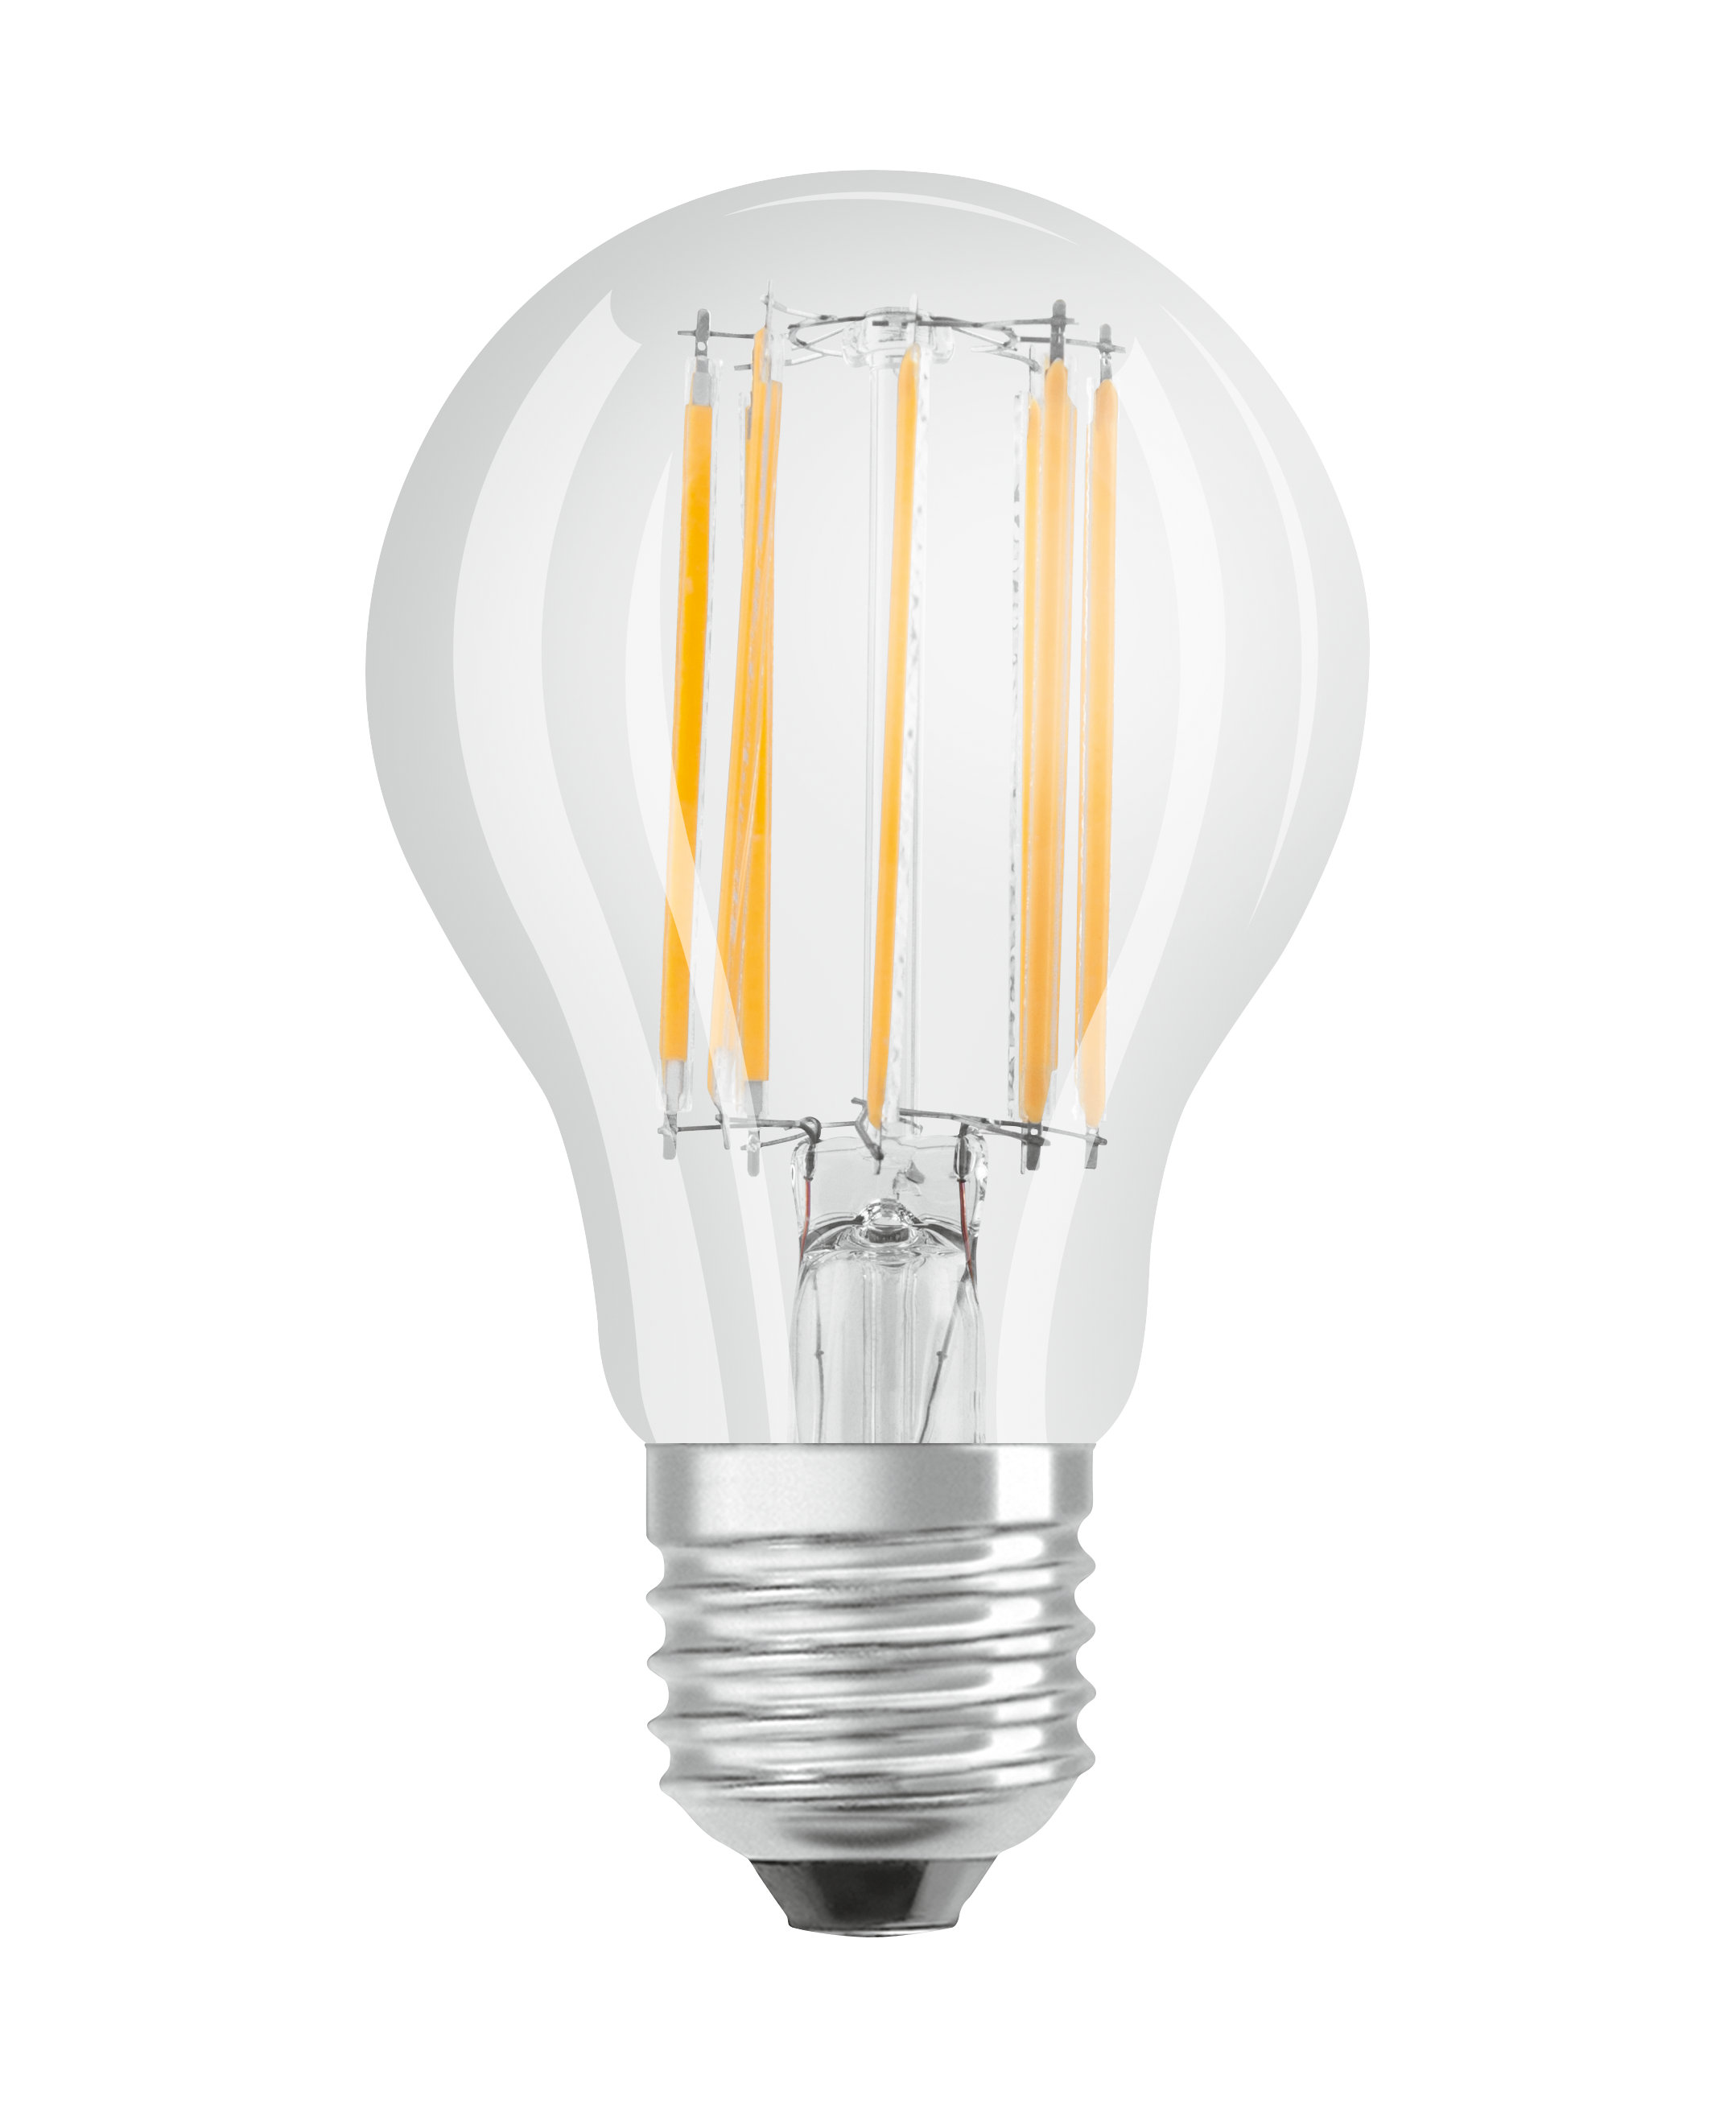 Kaltweiß A LED LED CLASSIC Lampe OSRAM  Lumen 1521 Retrofit